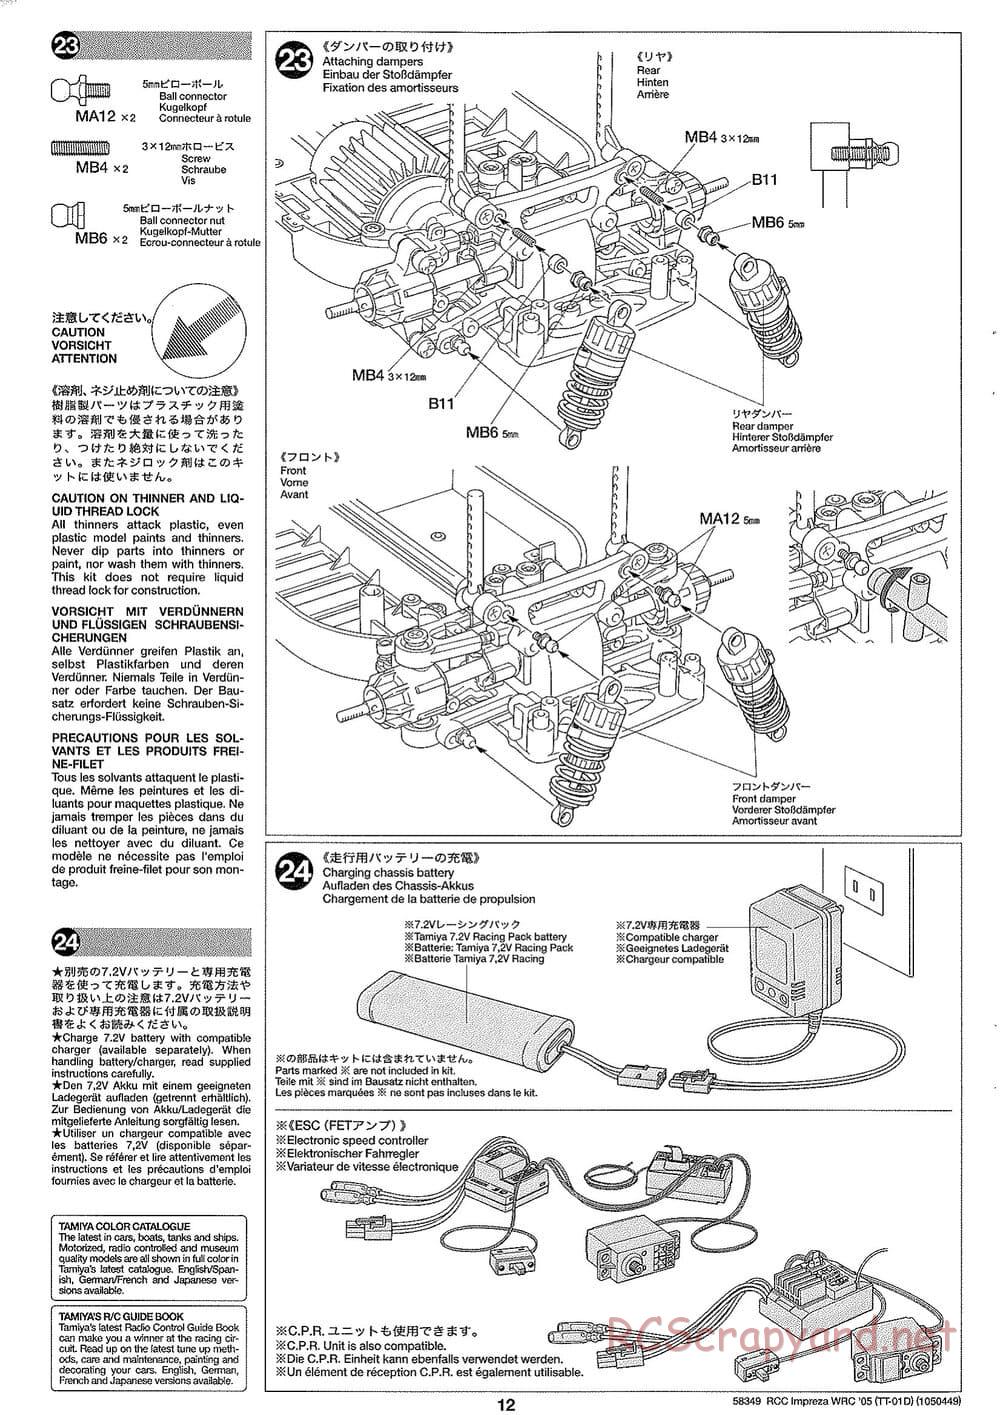 Tamiya - Subaru Impreza WRC Monte Carlo 05 - Drift Spec - TT-01D Chassis - Manual - Page 12